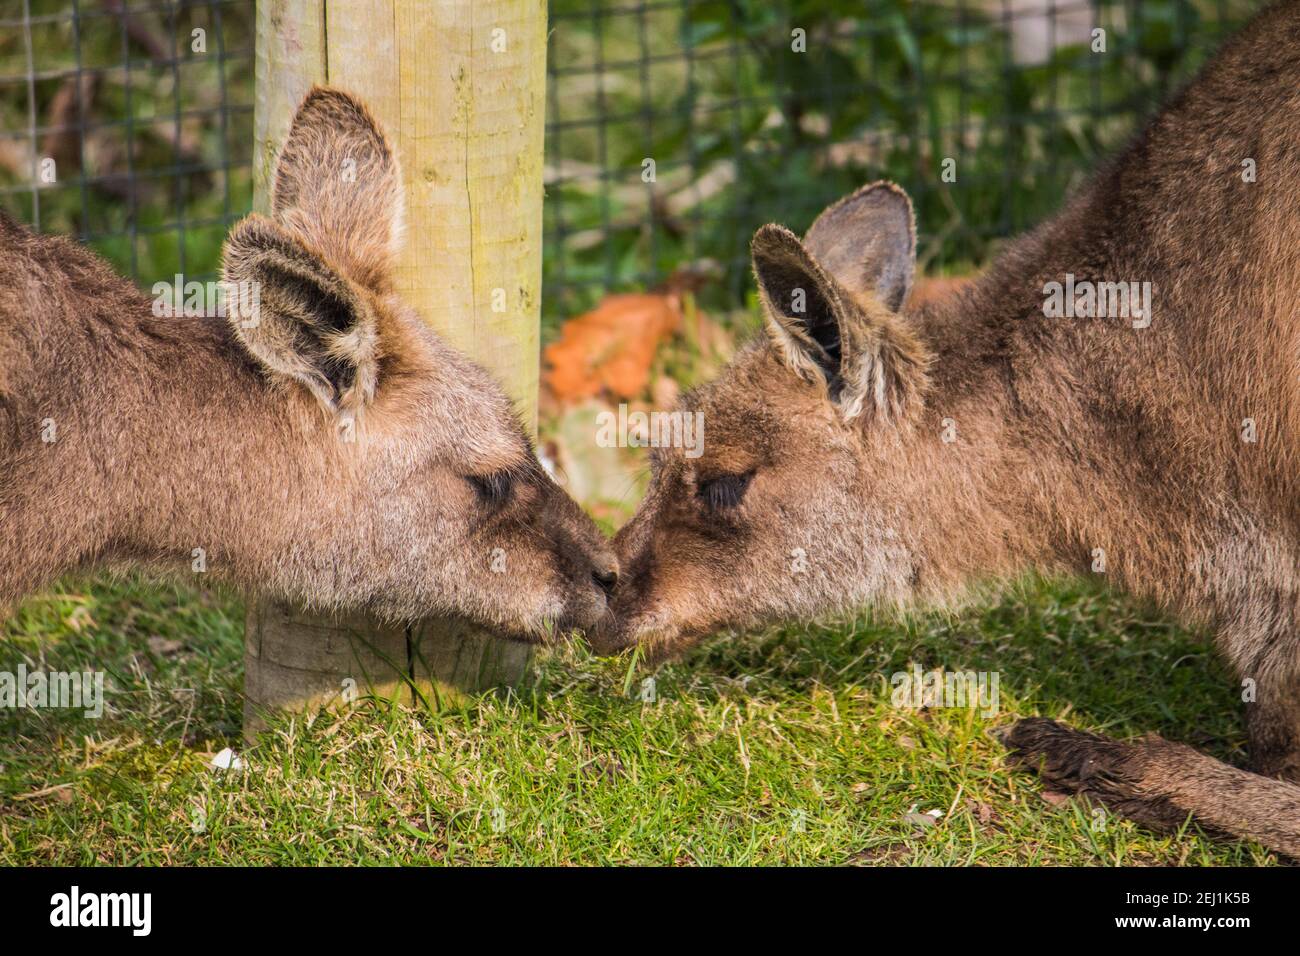 Two wild kangaroos kiss and exchange effusions. Romantic moment Stock Photo